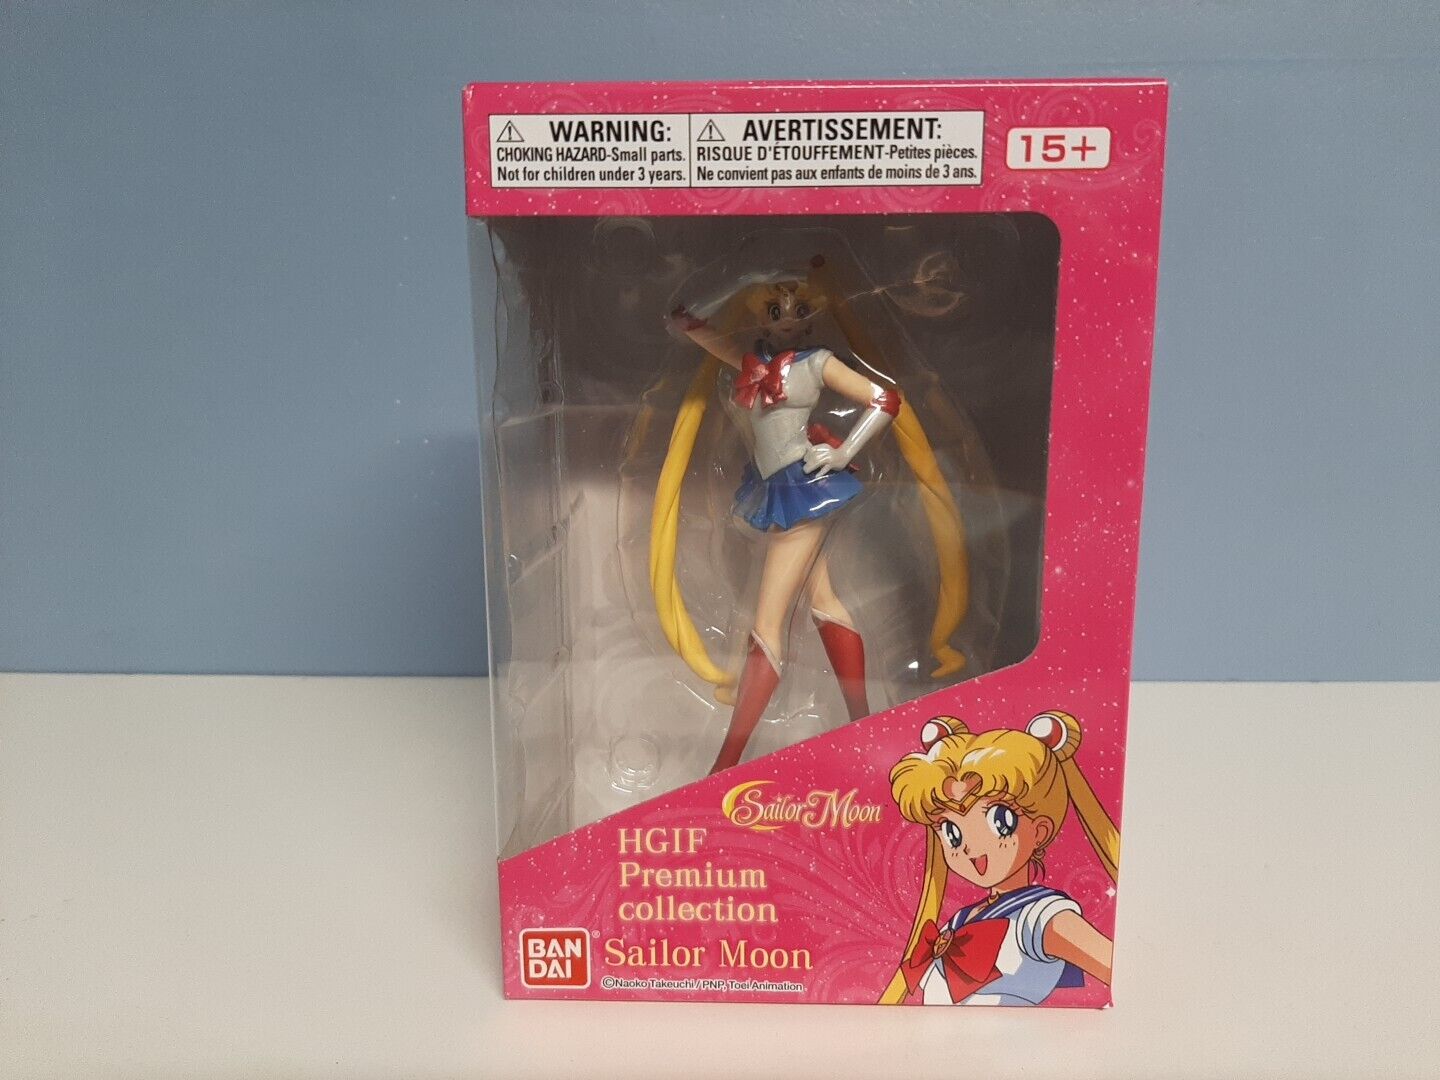 Sailor Moon Action Figure. 5 Inch. Premium Collection Little Buddy Ban Dai